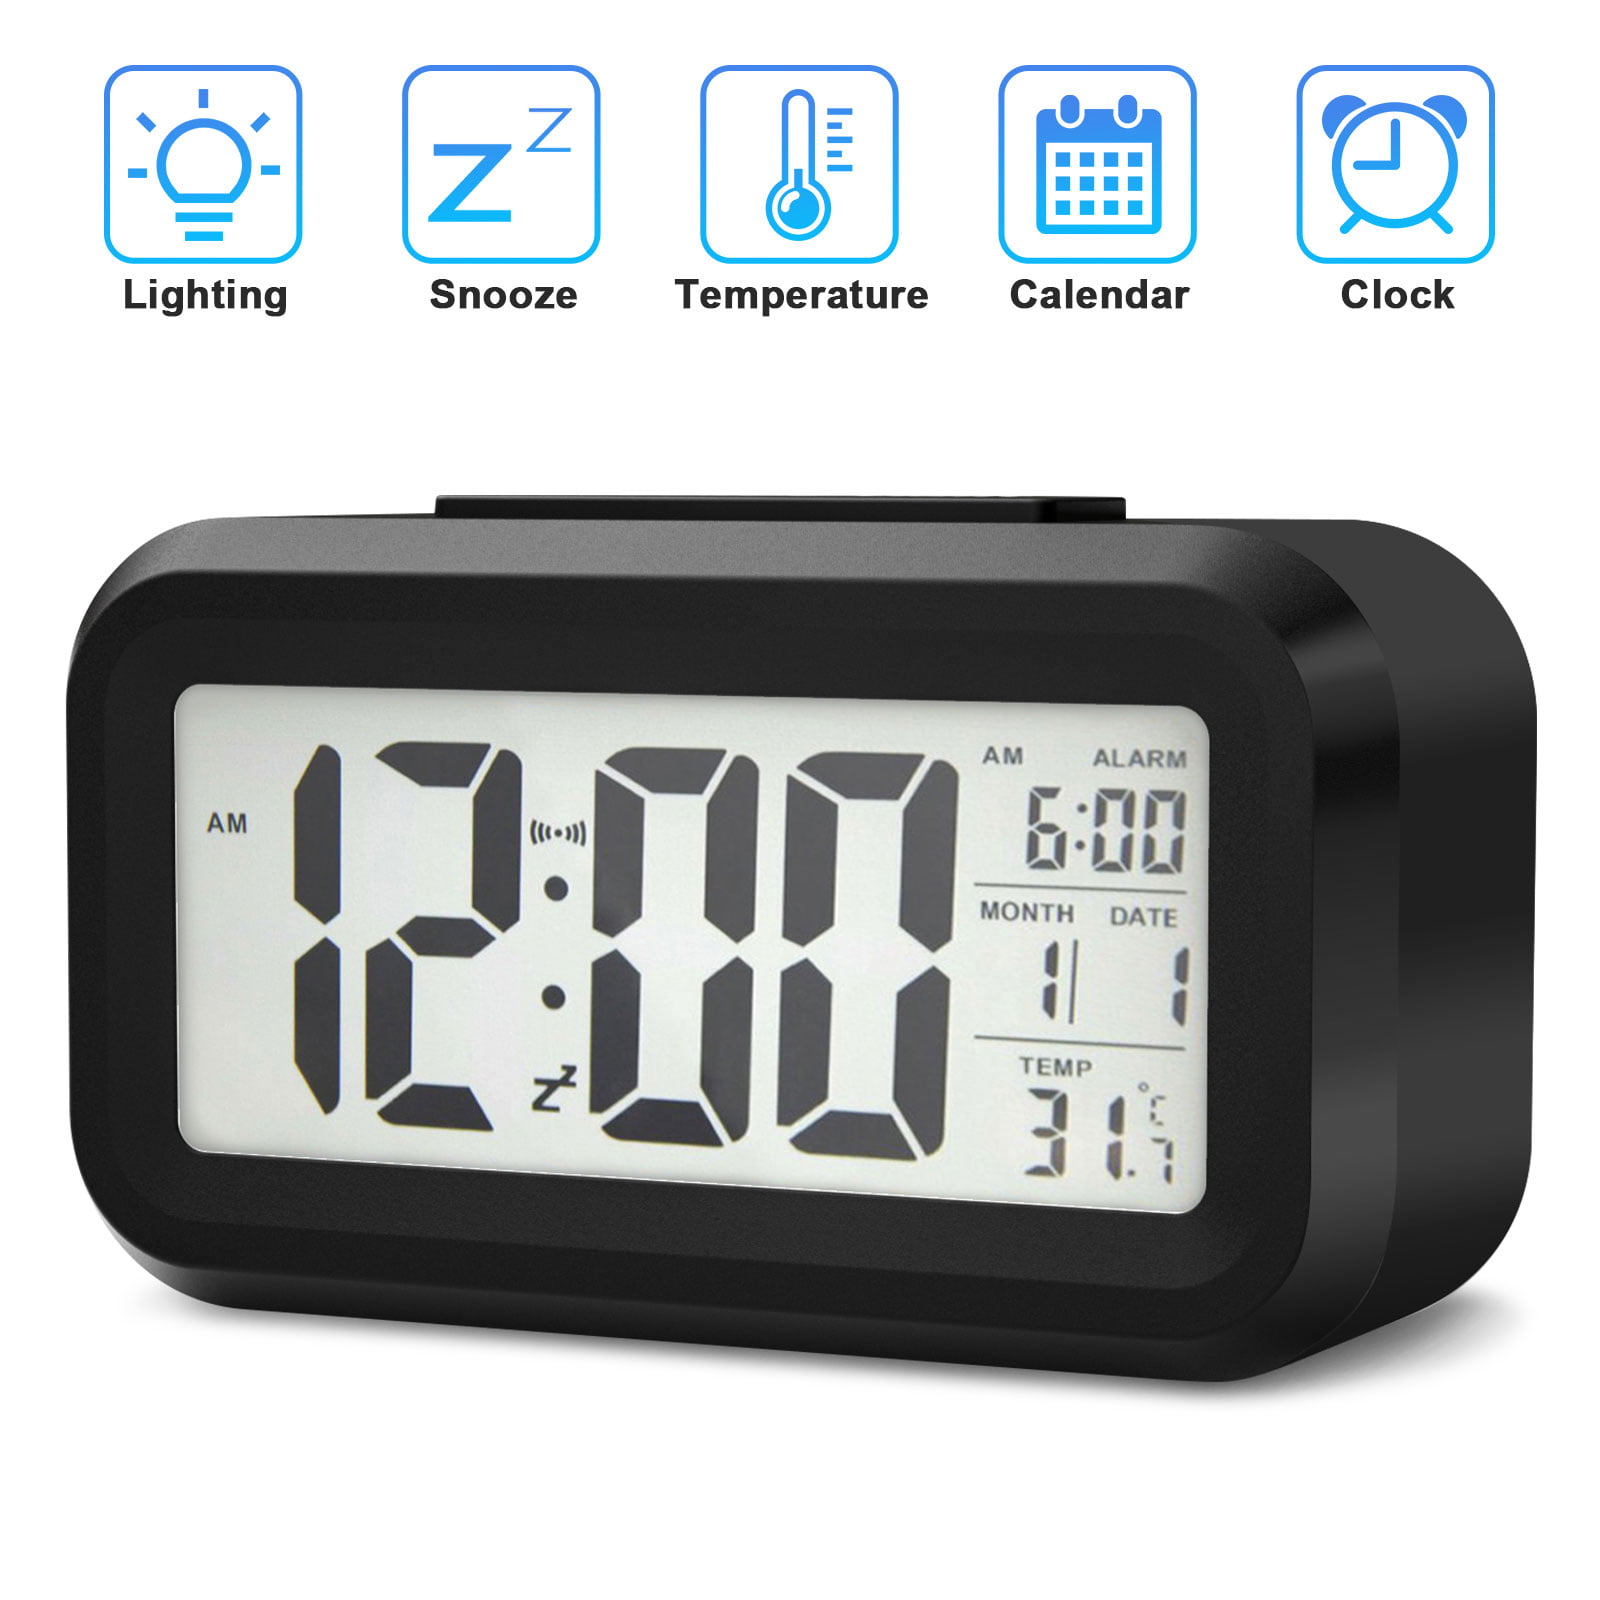 Samshow Travel Alarm Clock temperature/Week/Date/Repeating Snooze/Blue Backlight 